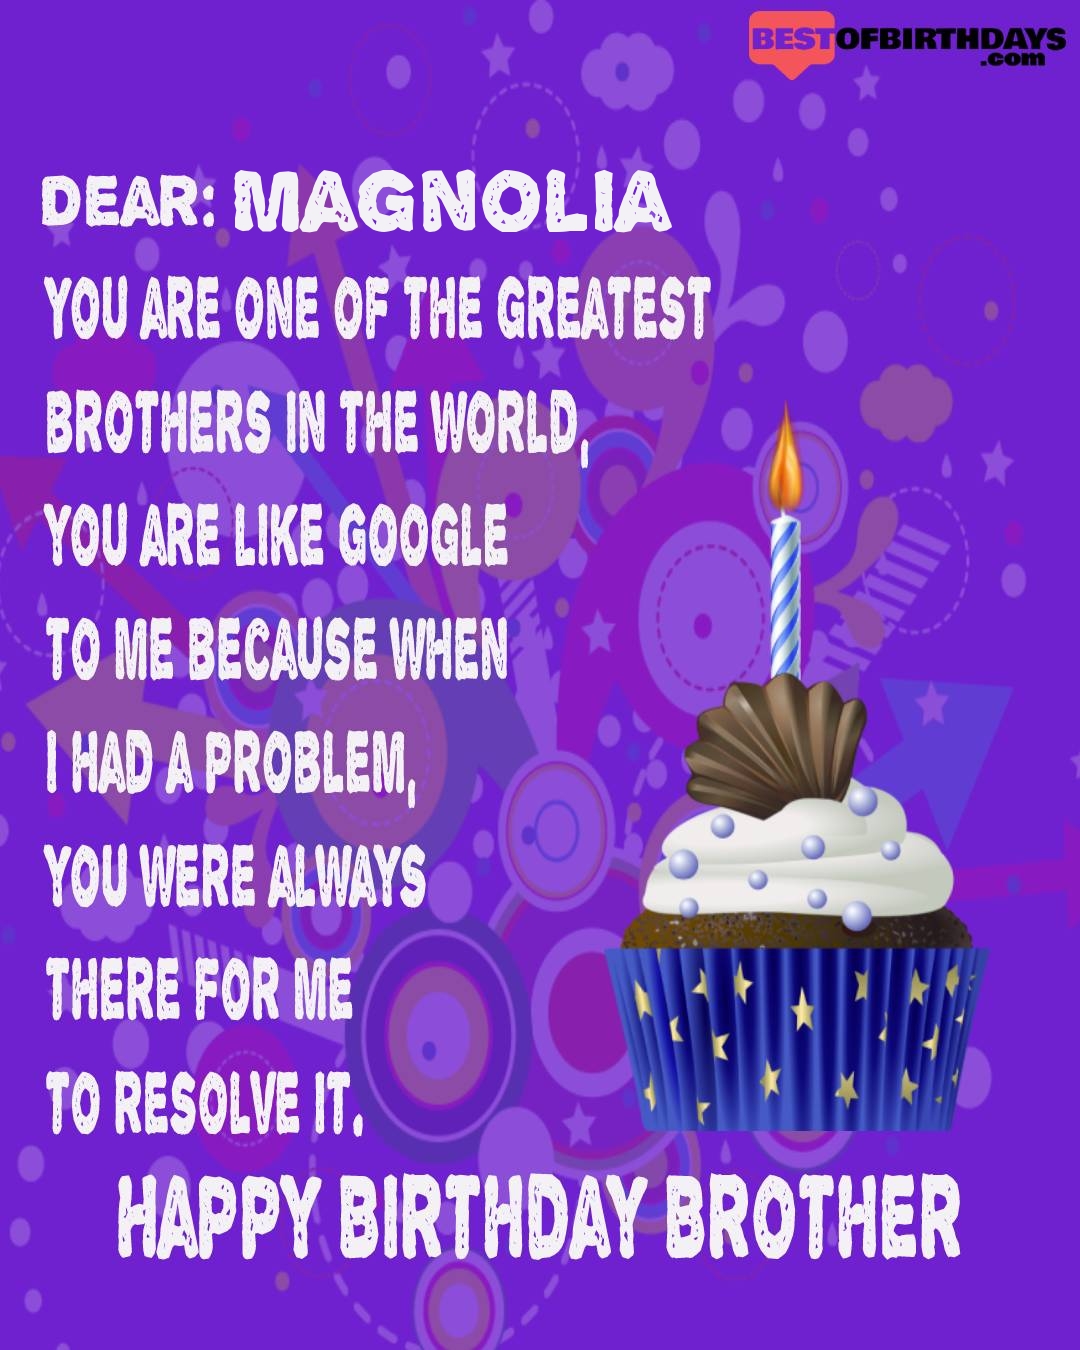 Happy birthday magnolia bhai brother bro